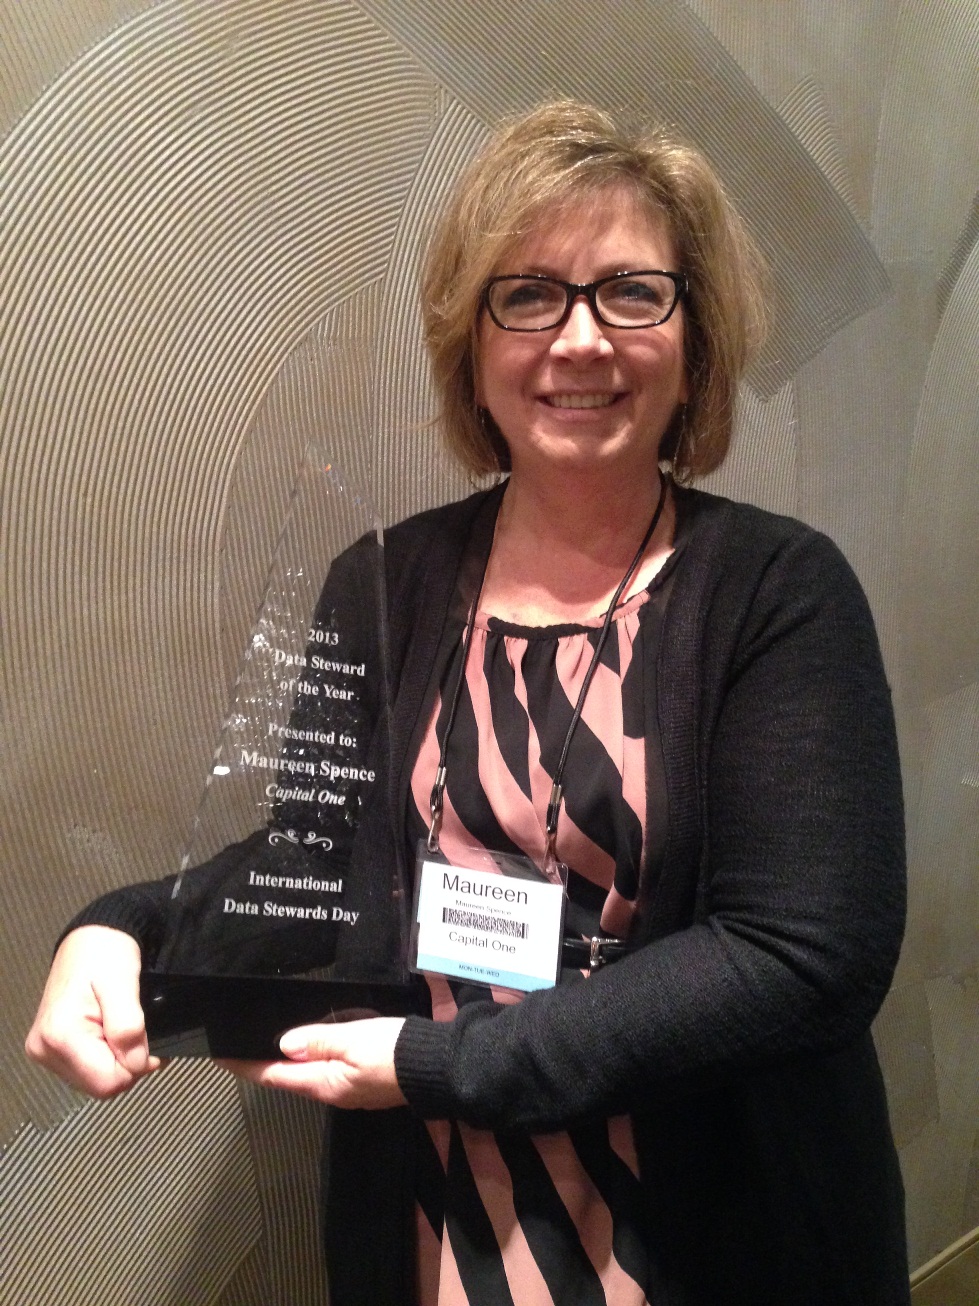 Maureen Spence, 2013 Data Steward of the Year